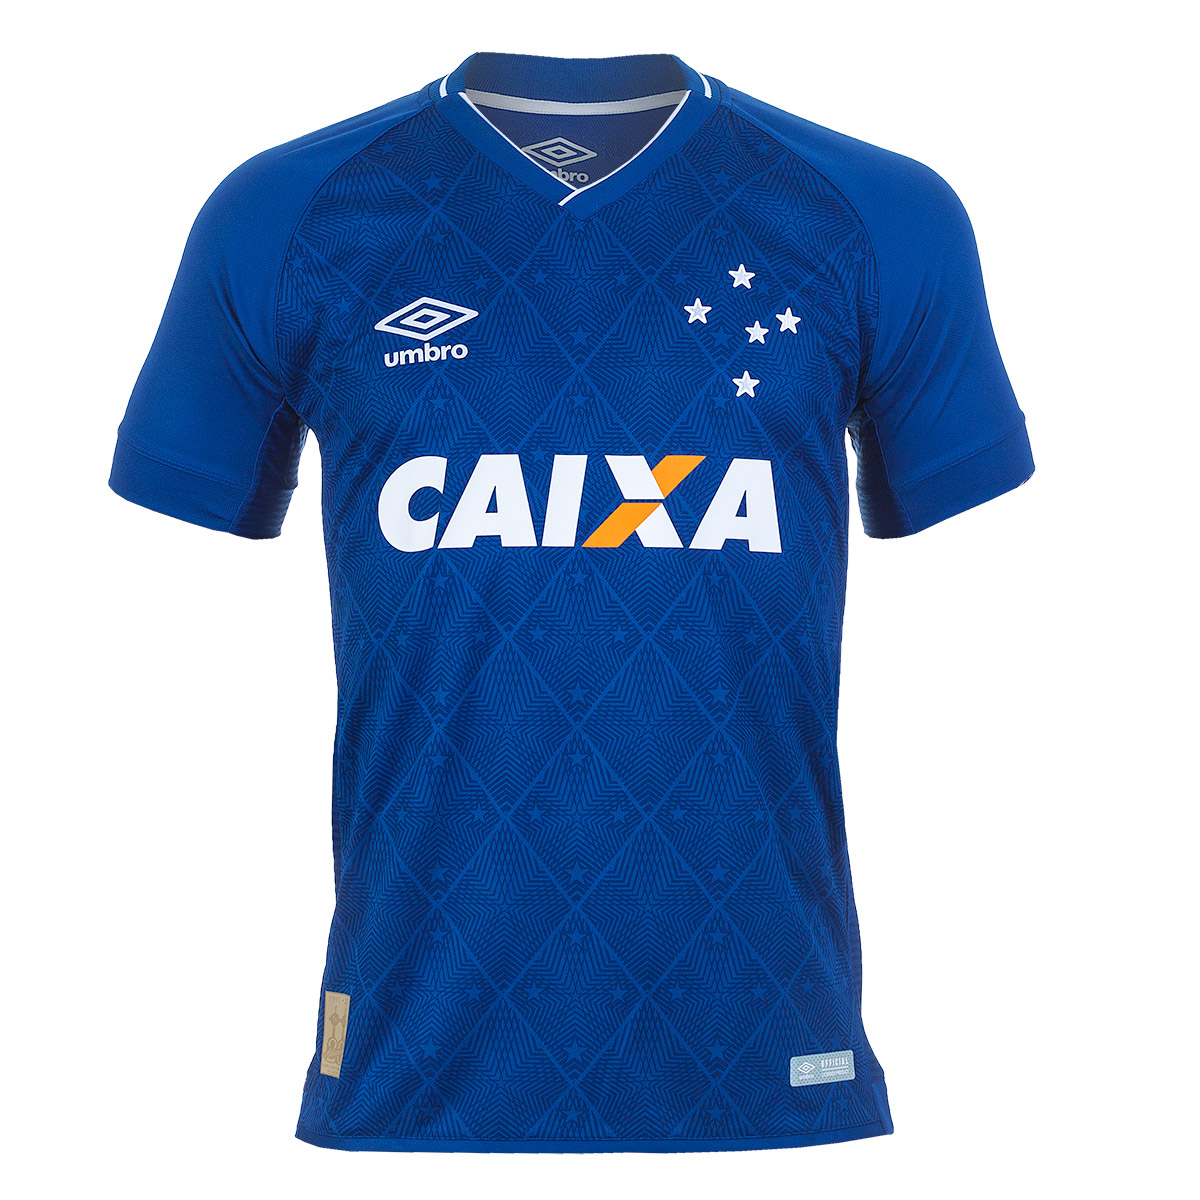 Camisa Masc. Umbro Cruzeiro Of 2017 Futebol - Royal/Branco